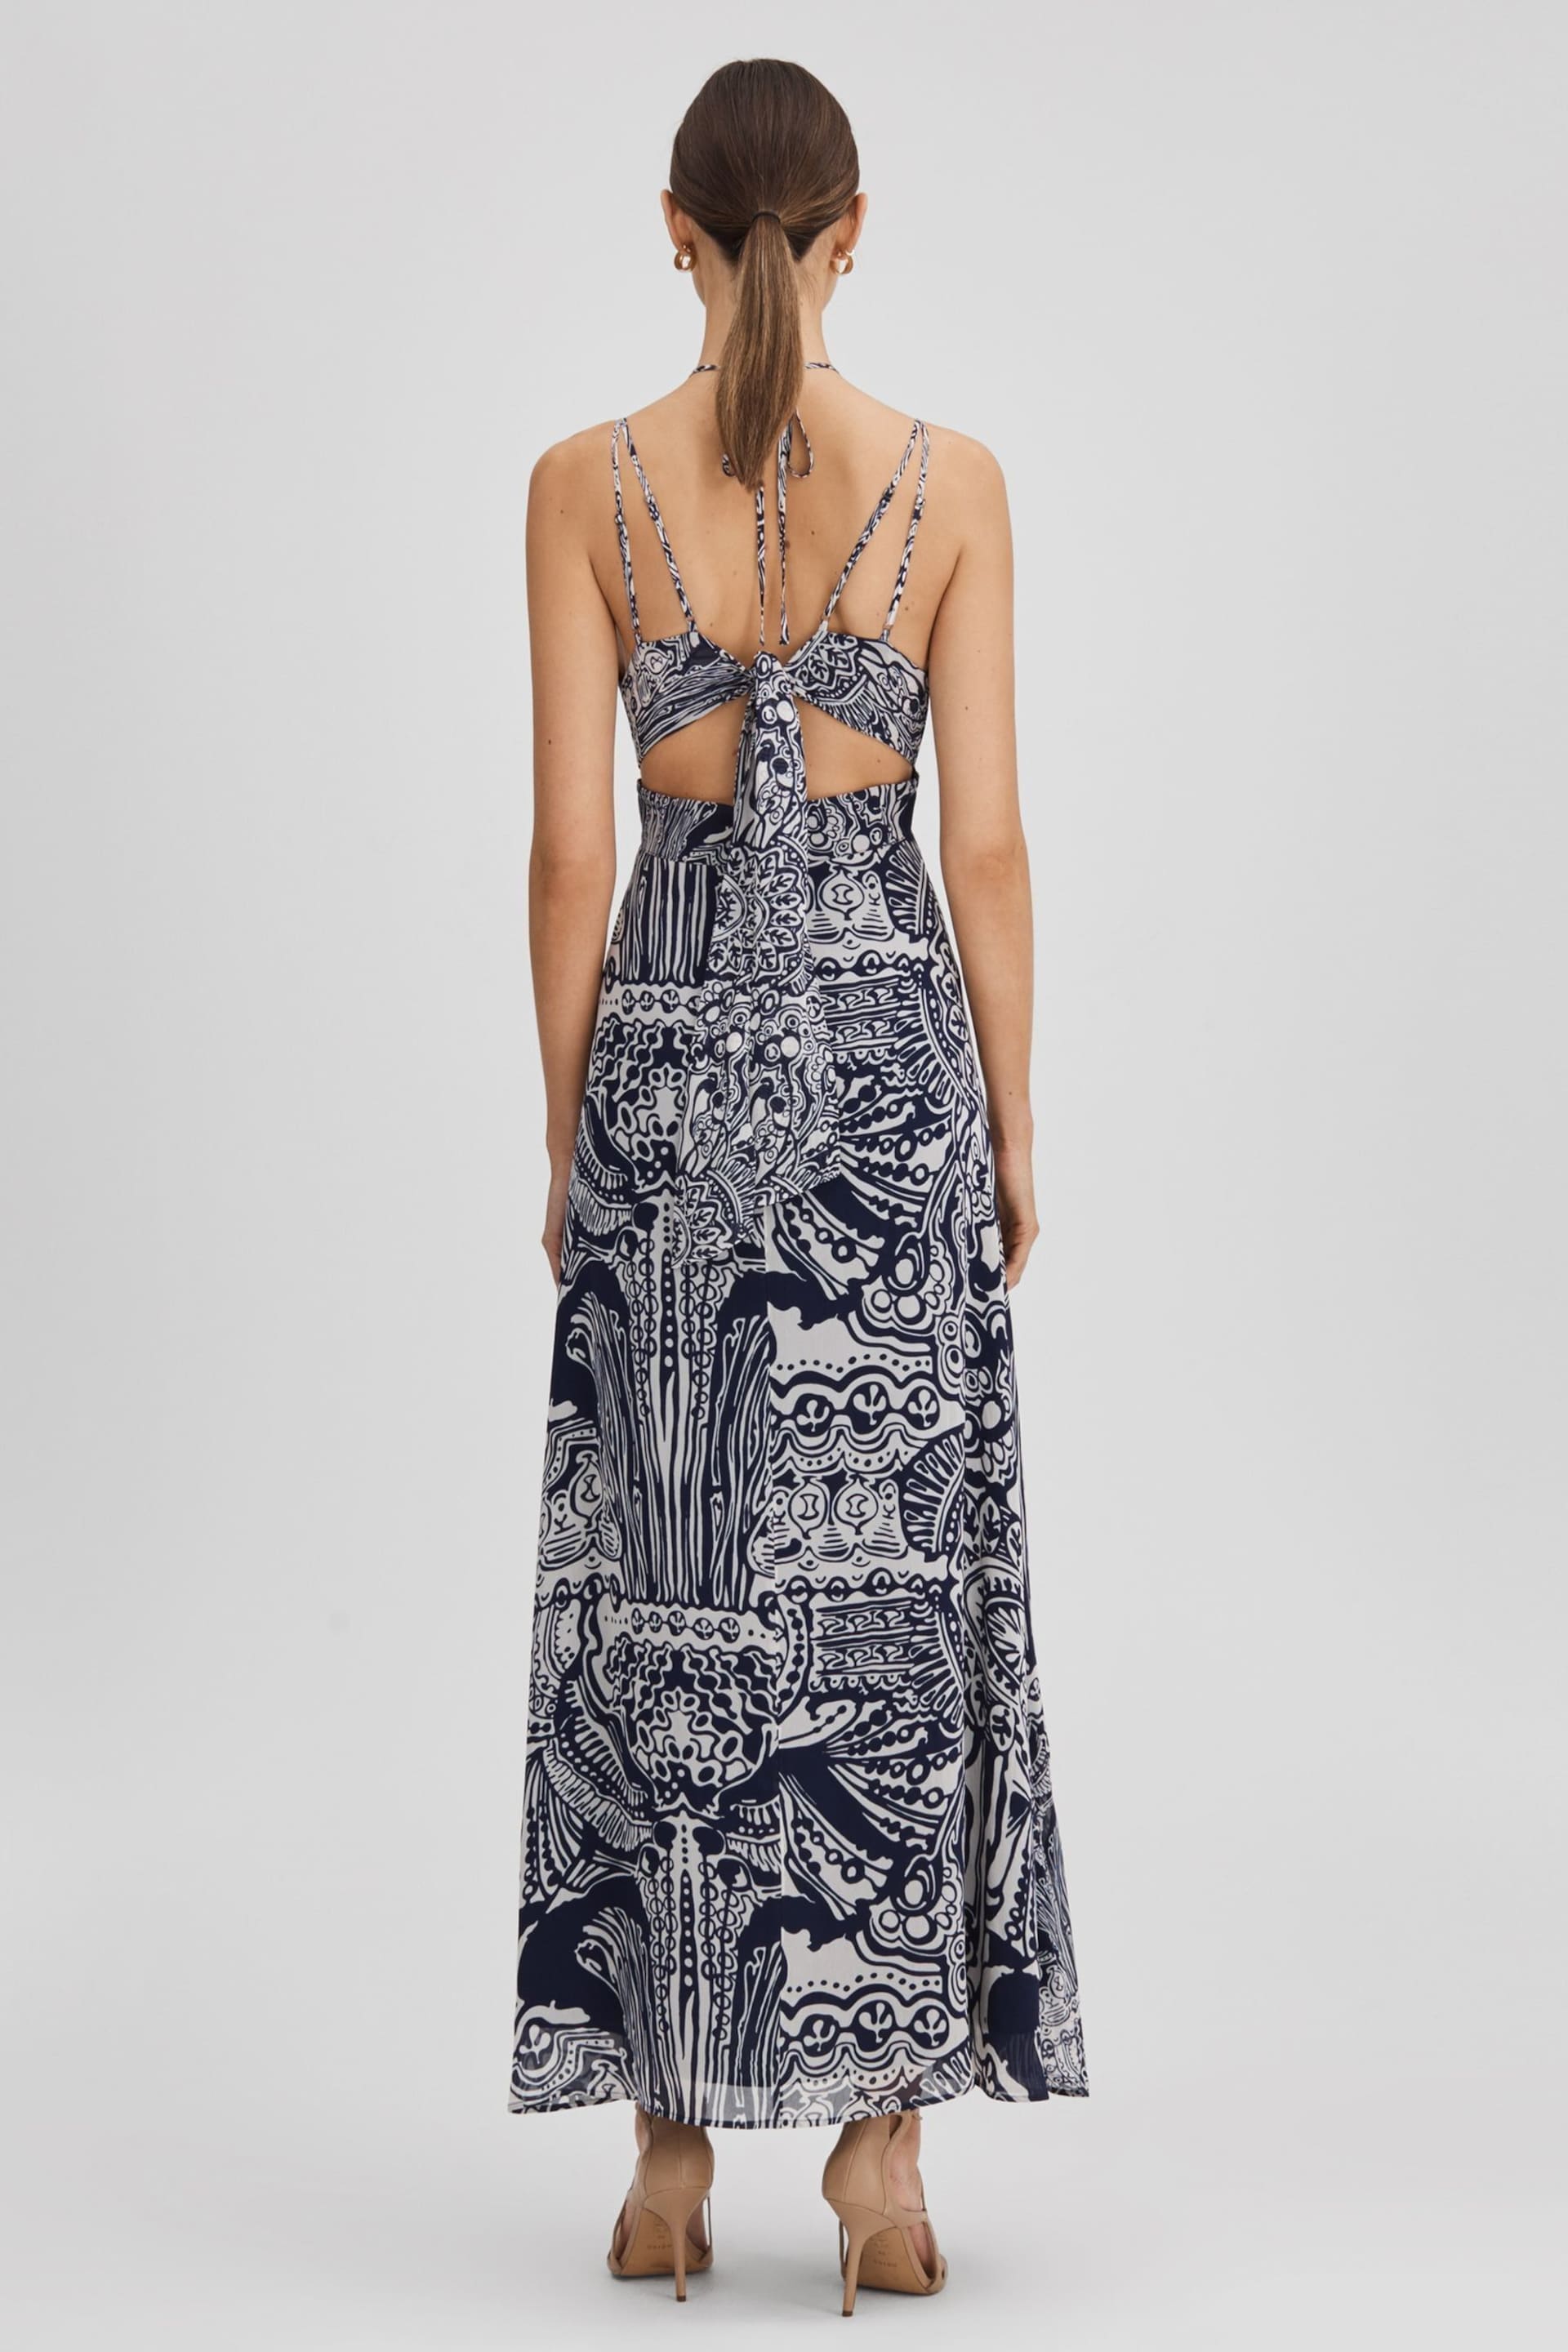 Reiss Navy Quinn Printed Strappy Resort Midi Dress - Image 5 of 6